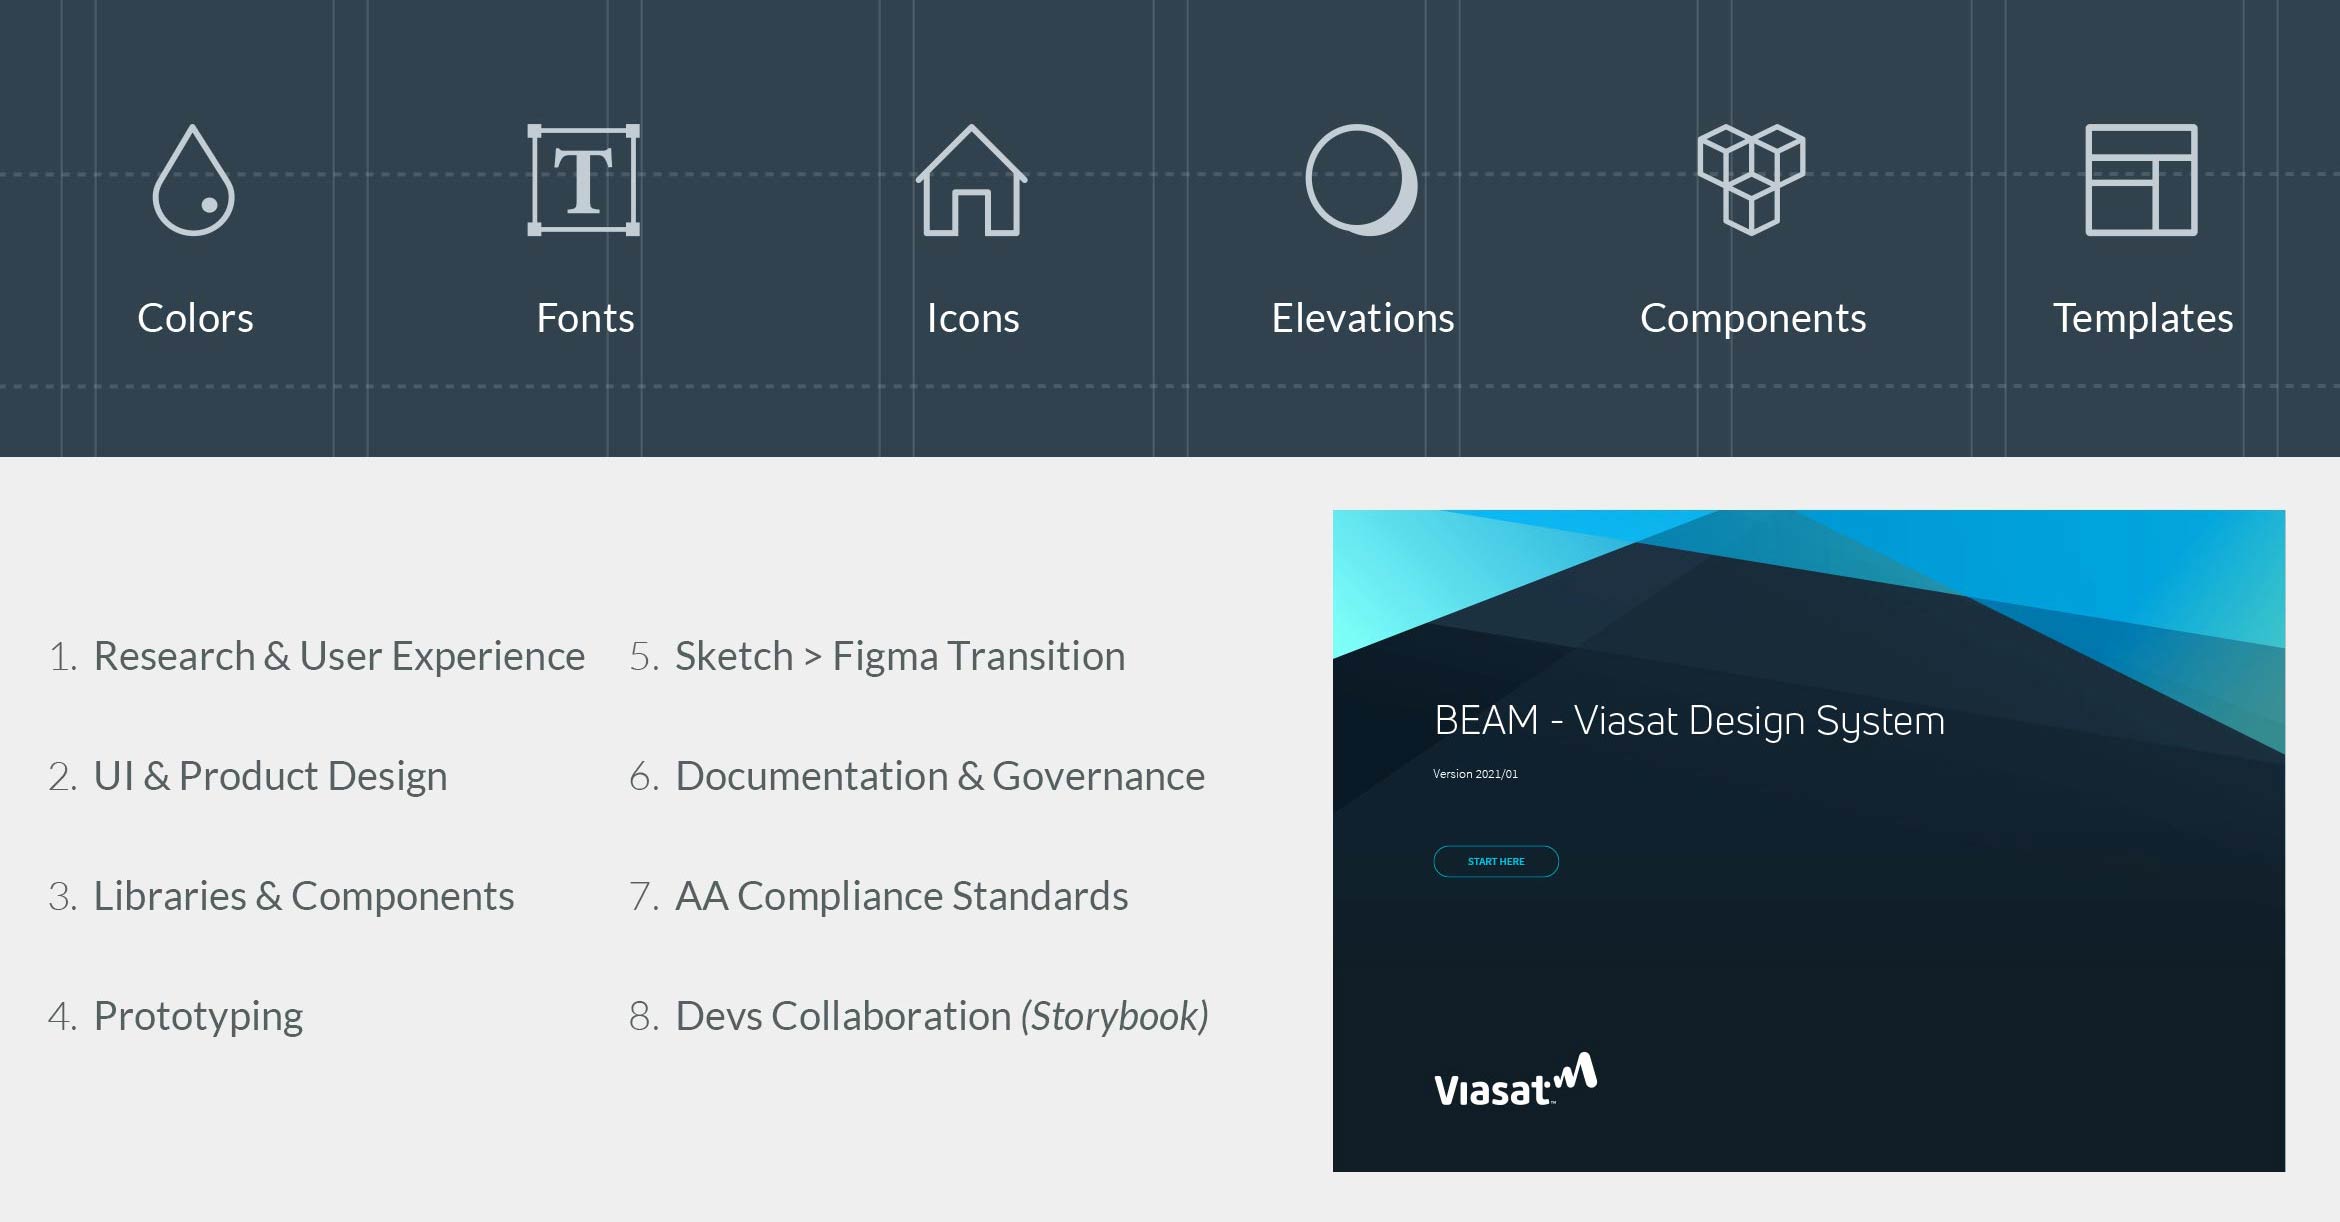 Viasat Design System - Product Design